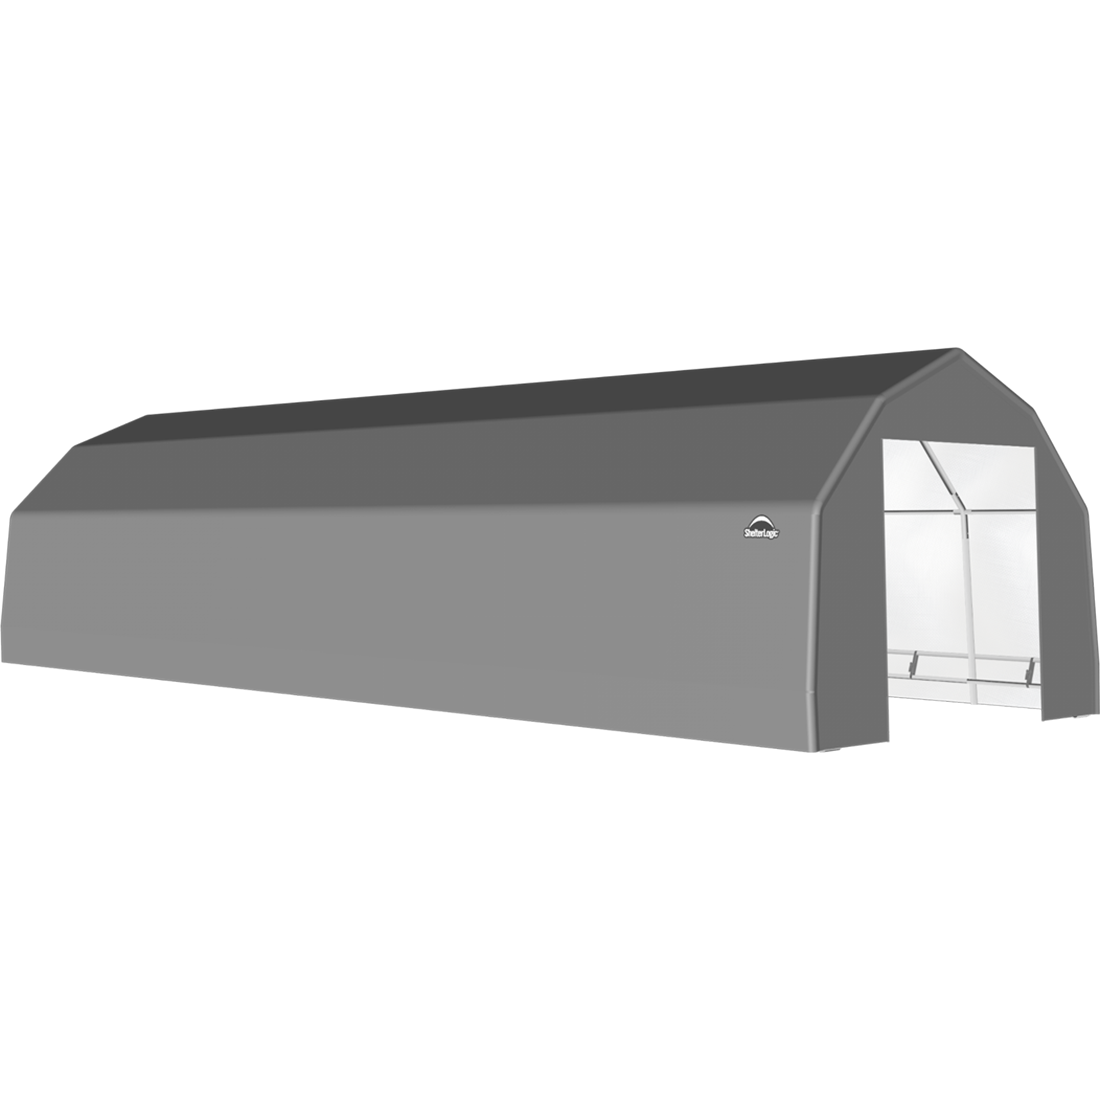 ShelterTech SP Series Barn Shelter, 15 ft. x 32 ft. x 11 ft. Heavy Duty PVC 14.5 oz. Gray